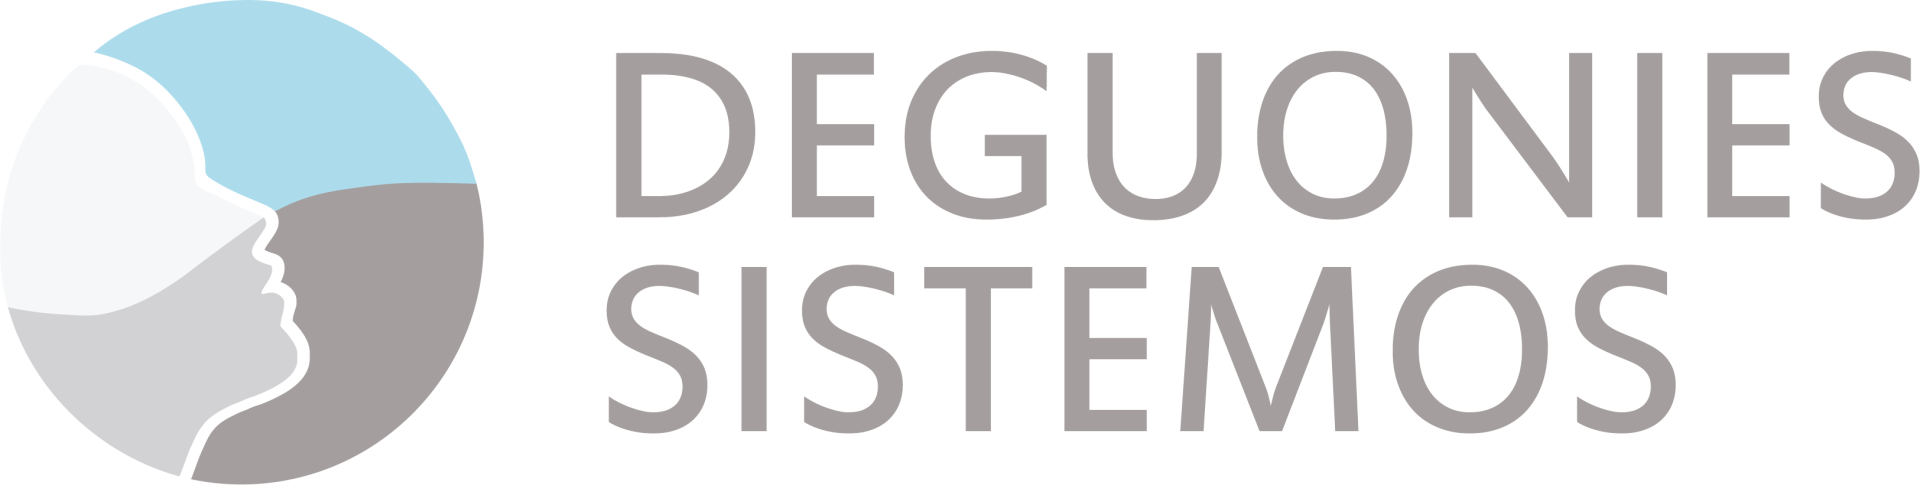 Deguonies sistemos Logo